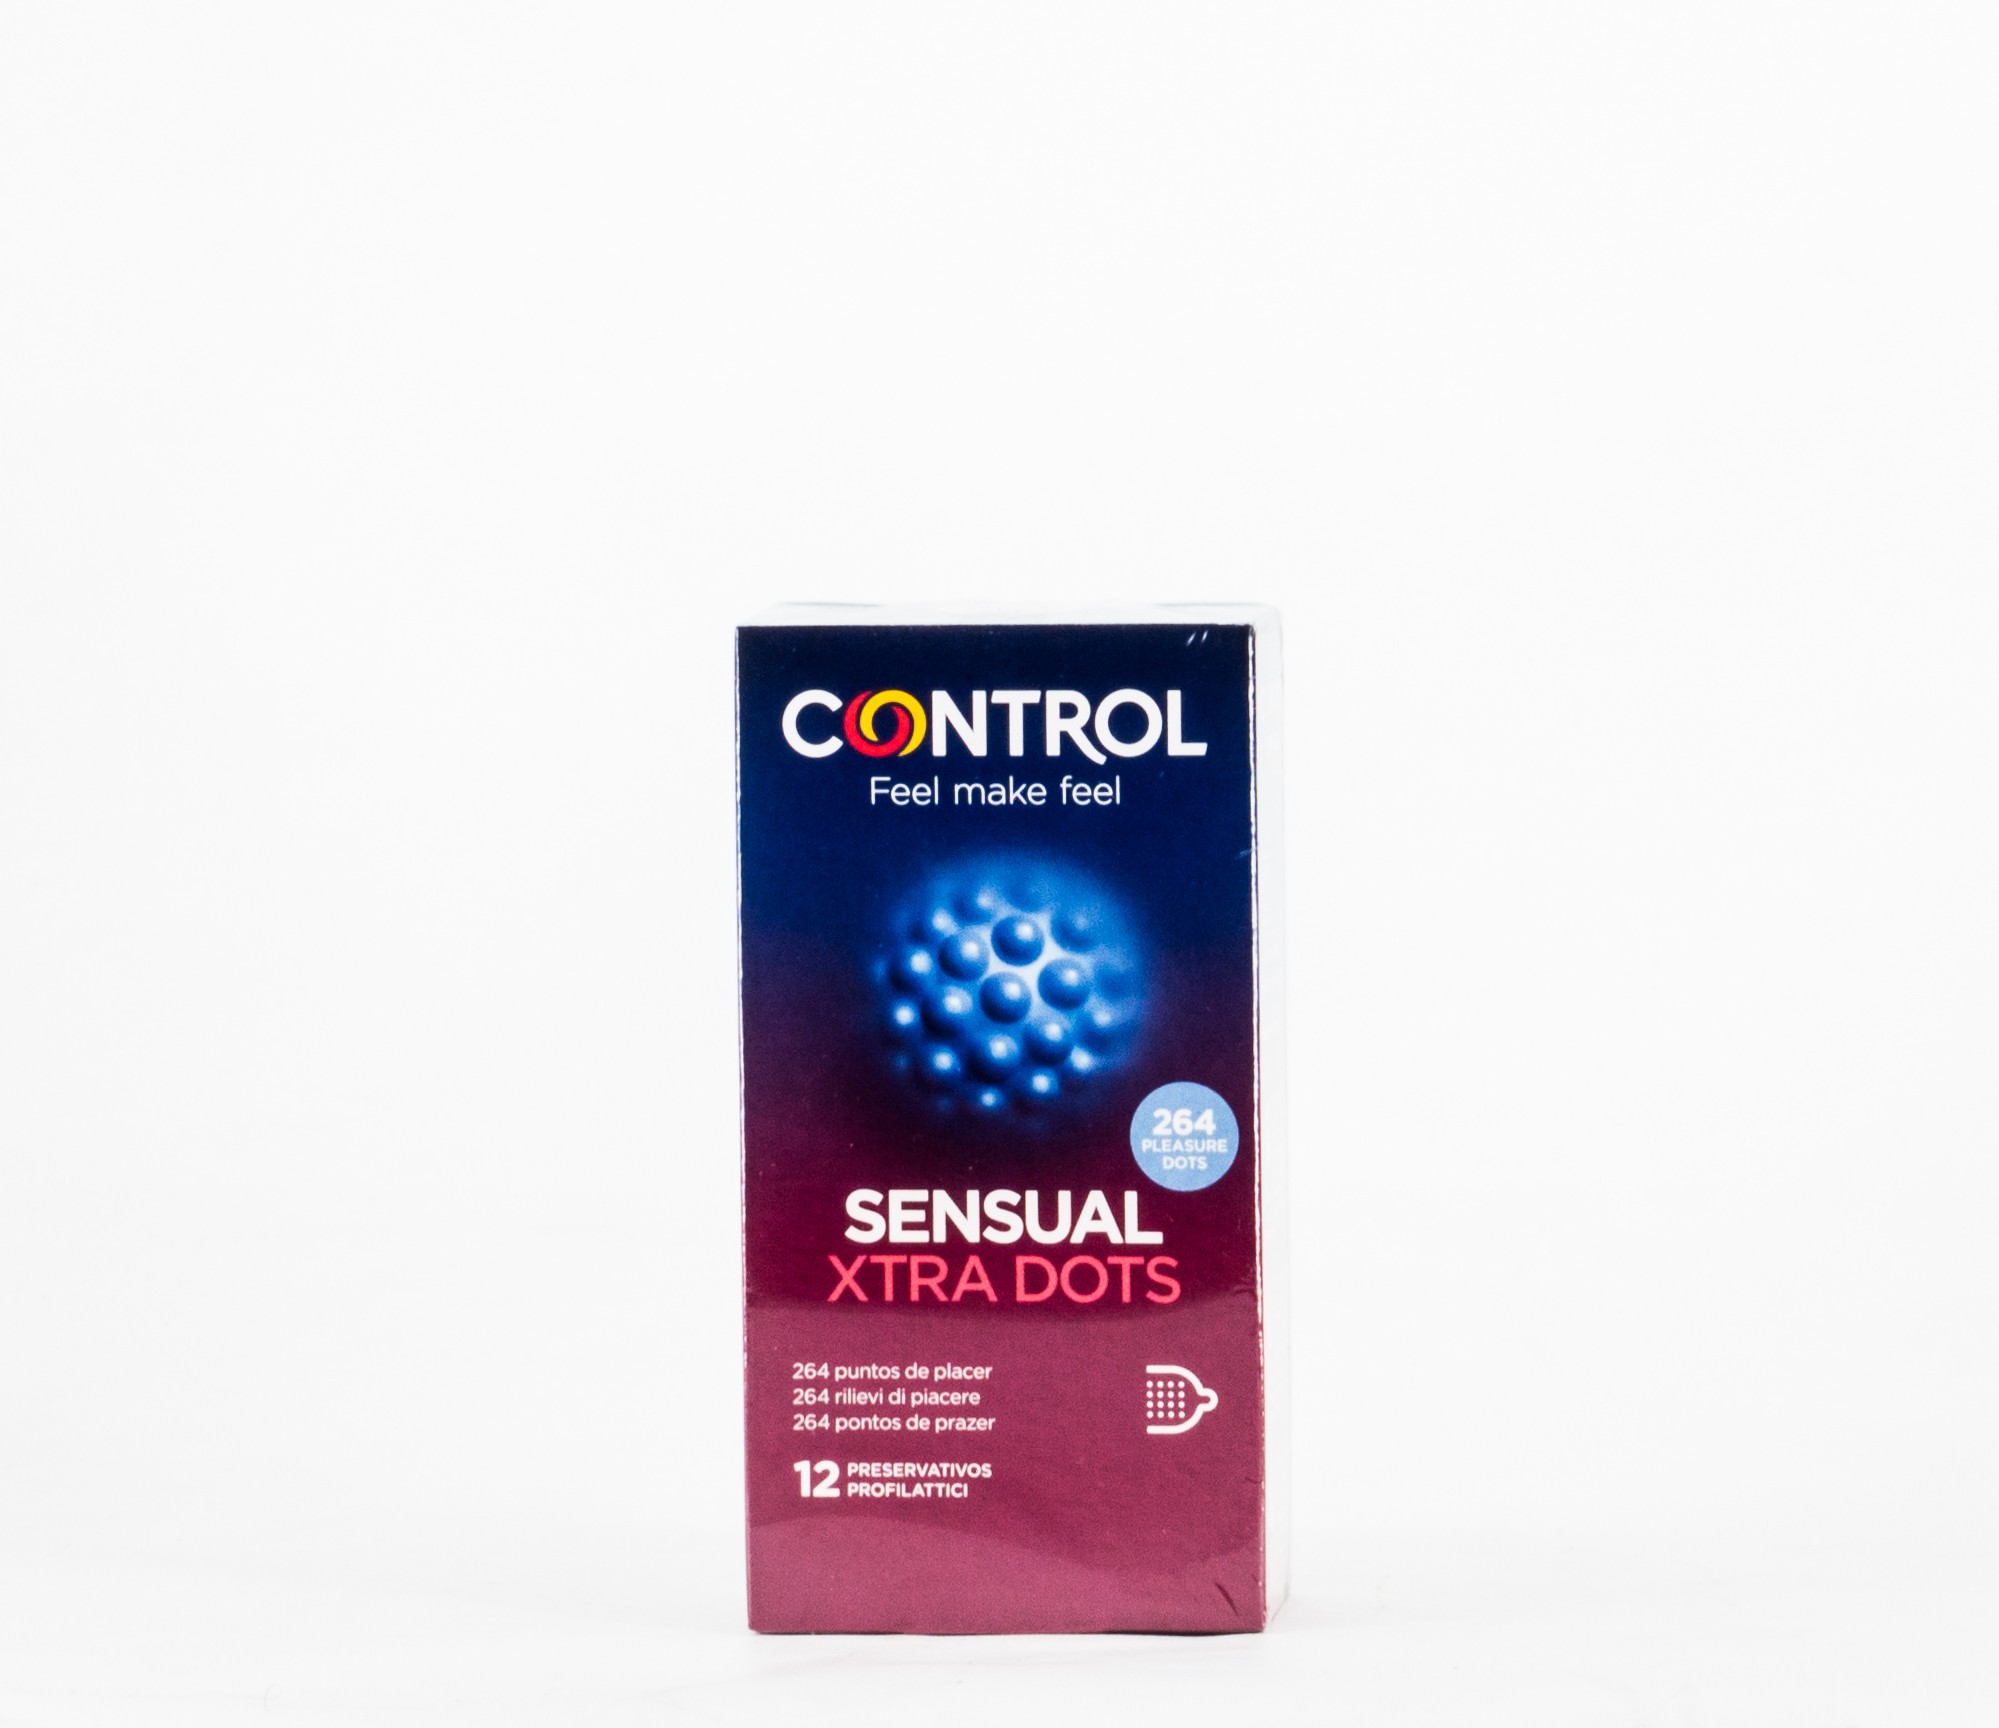 Control XtraSensation, 12 Preservativos.